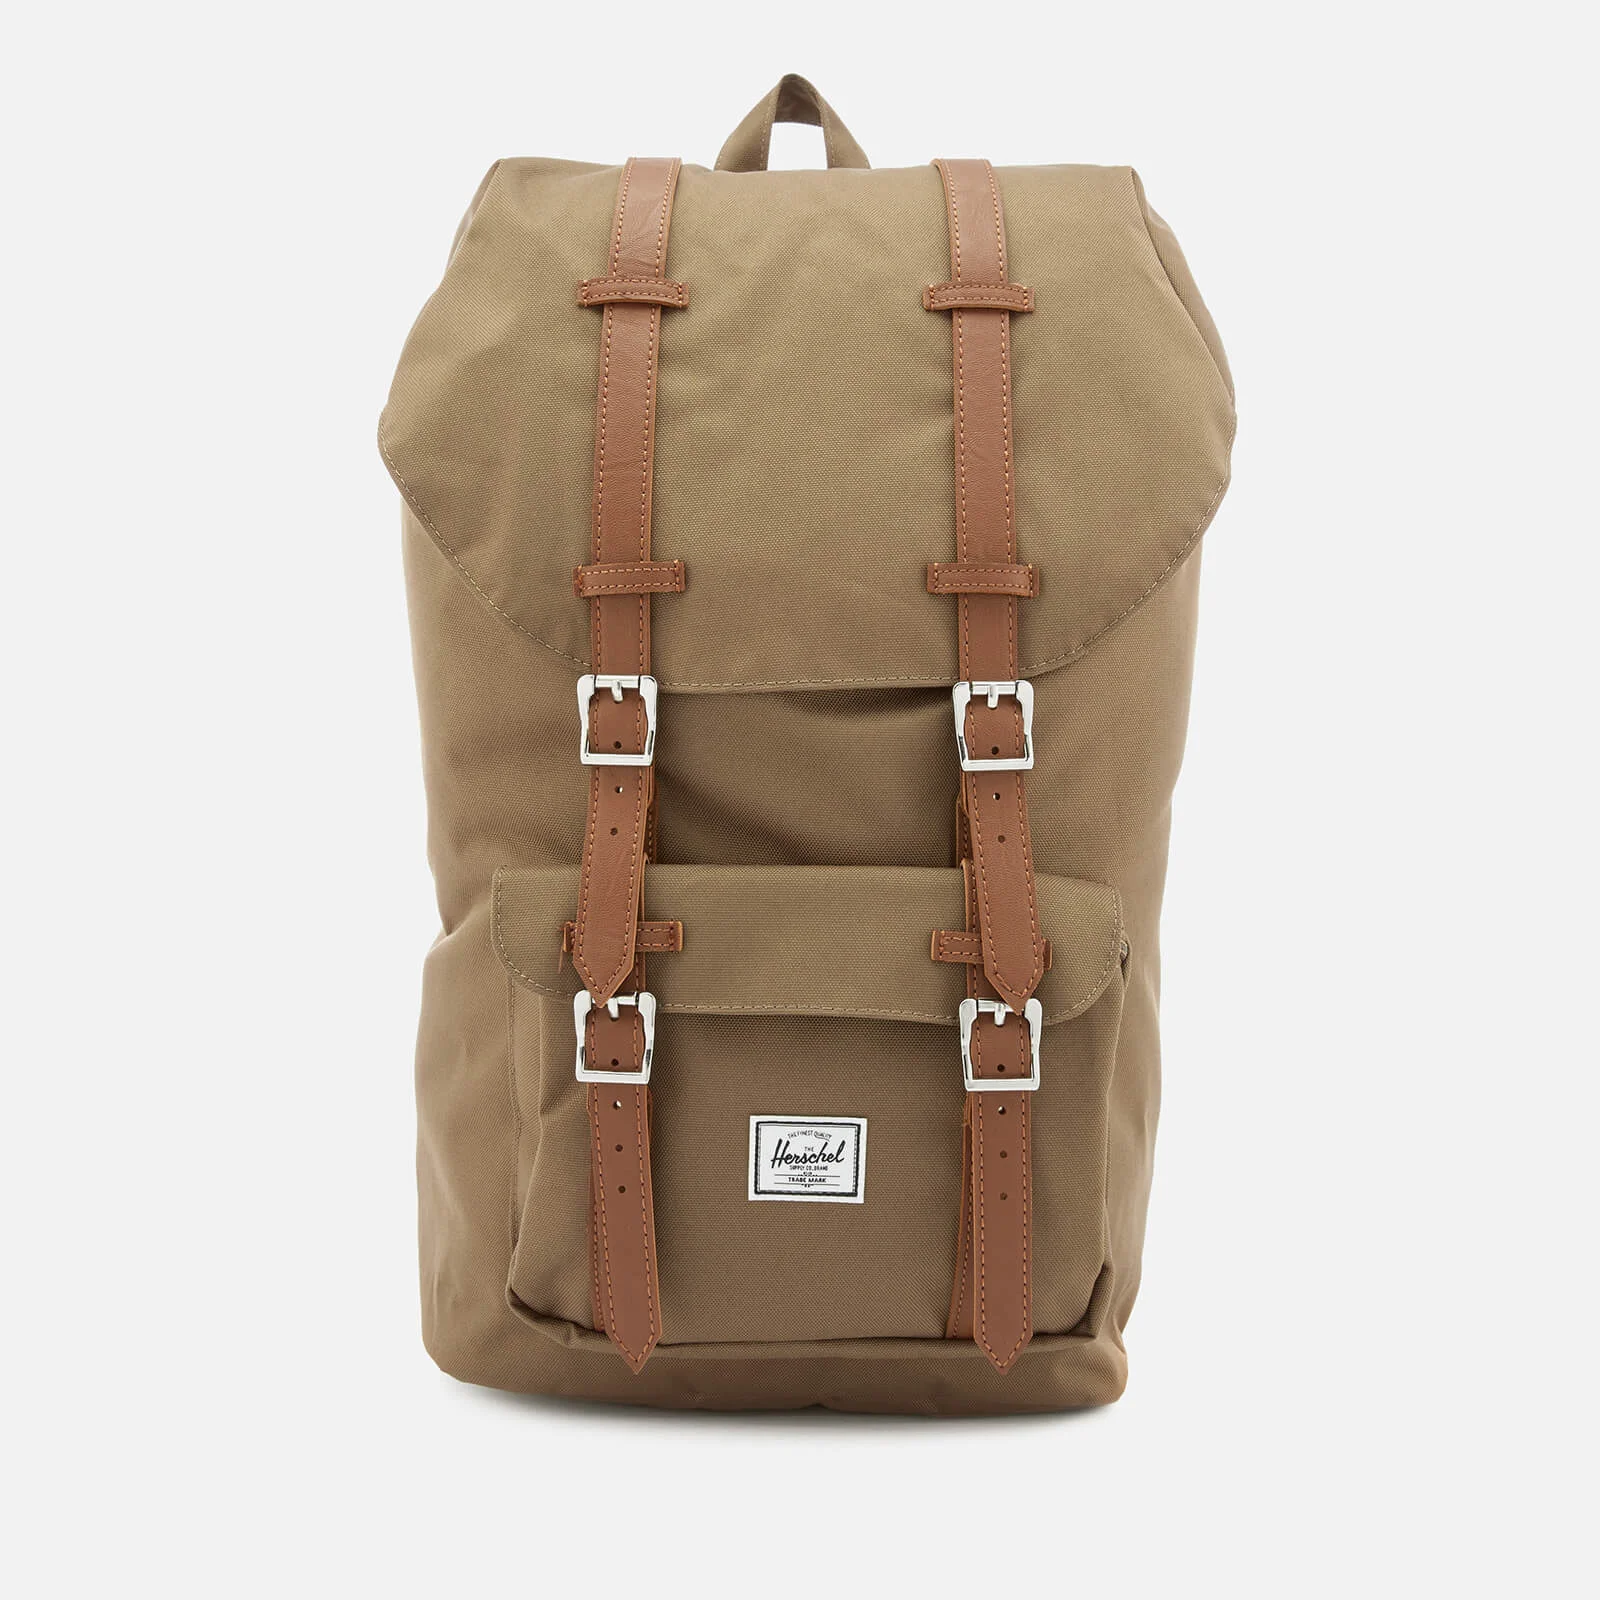 Herschel Supply Co. Men's Little America Backpack - Cub/Tan Image 1